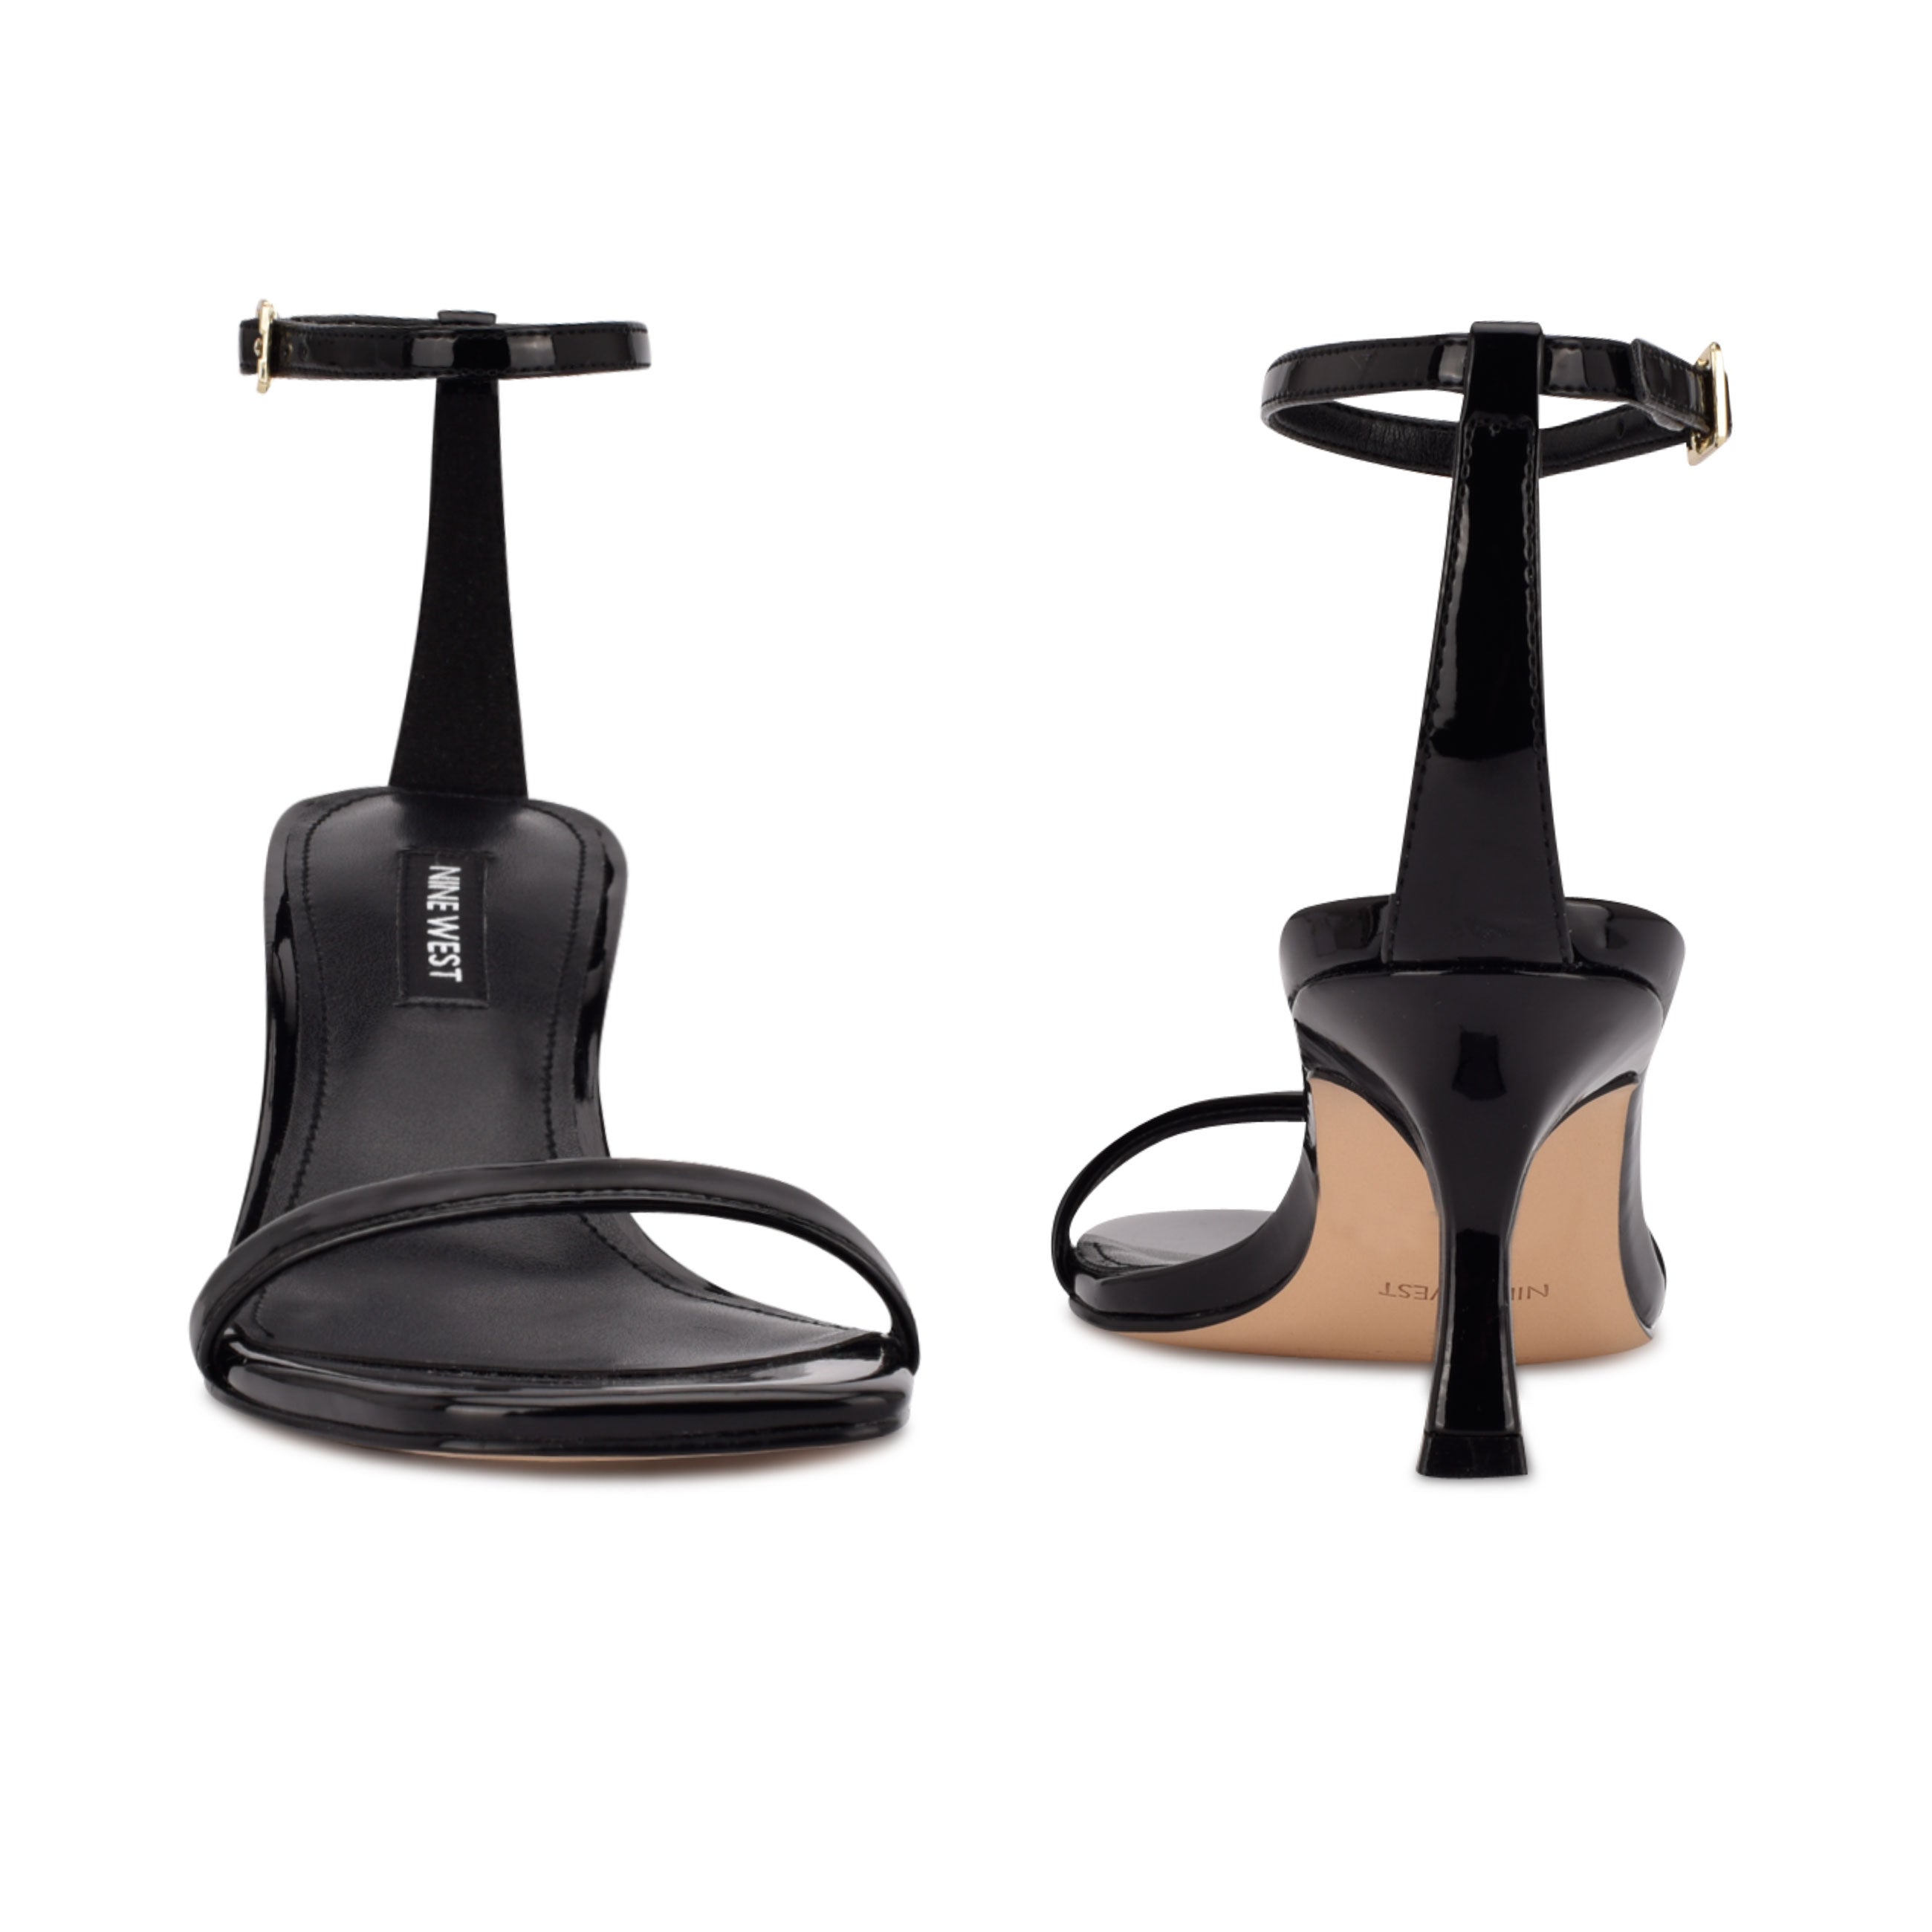 Linea Strap Mid Heeled Sandals | SportsDirect.com USA